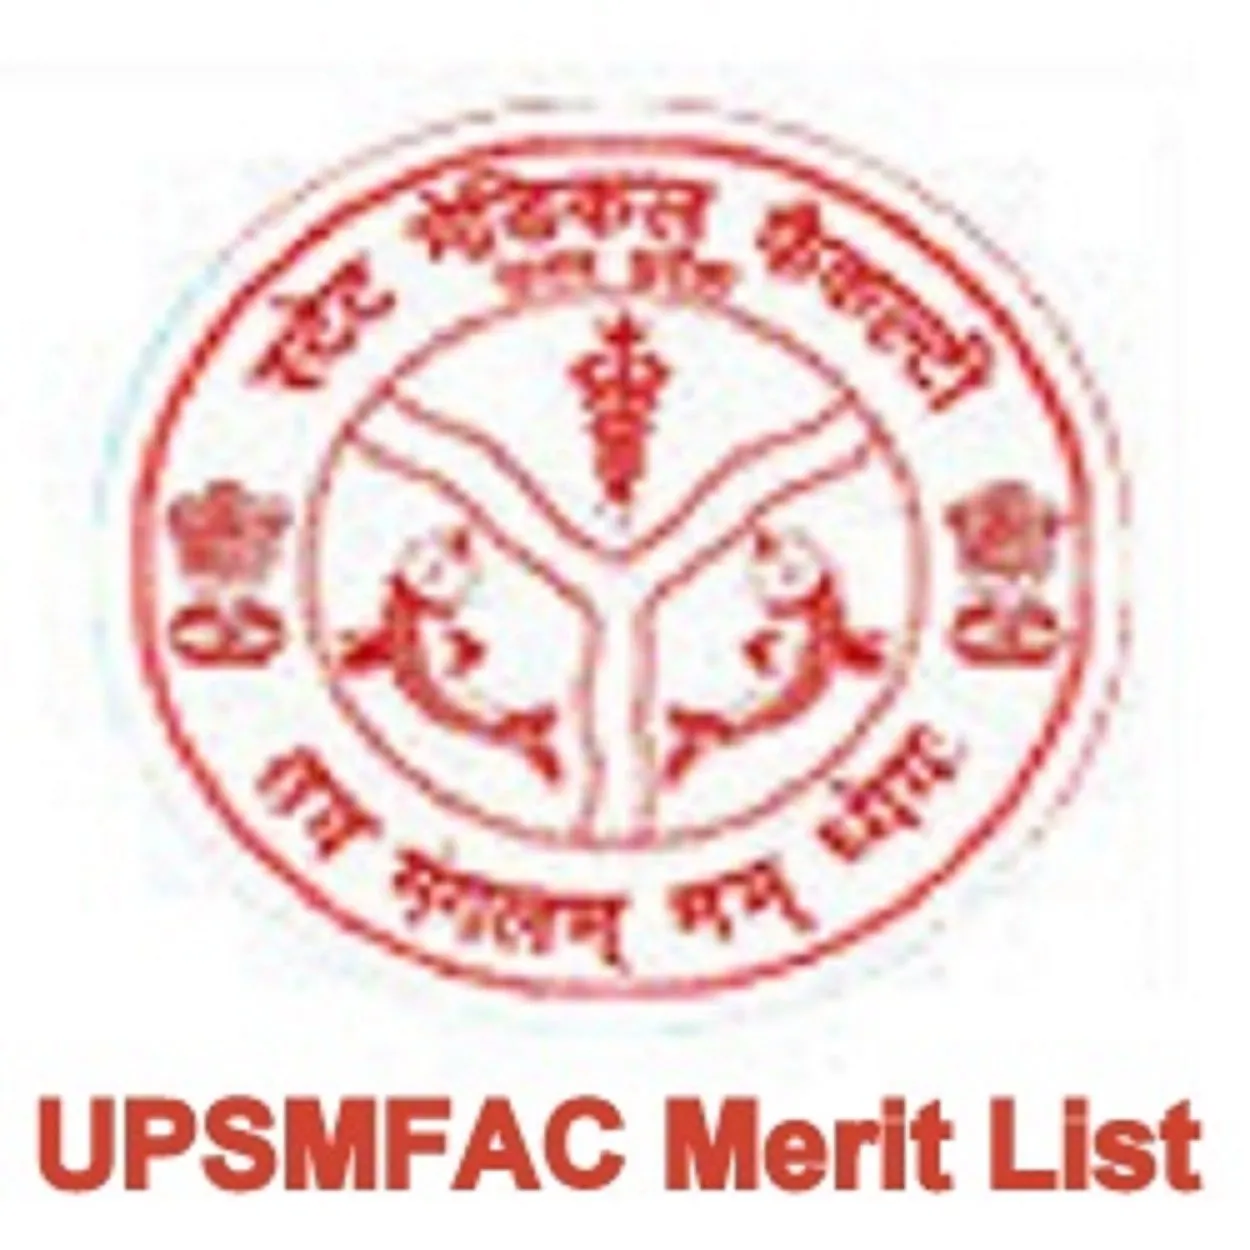 UPSMFAC Merit List 2022